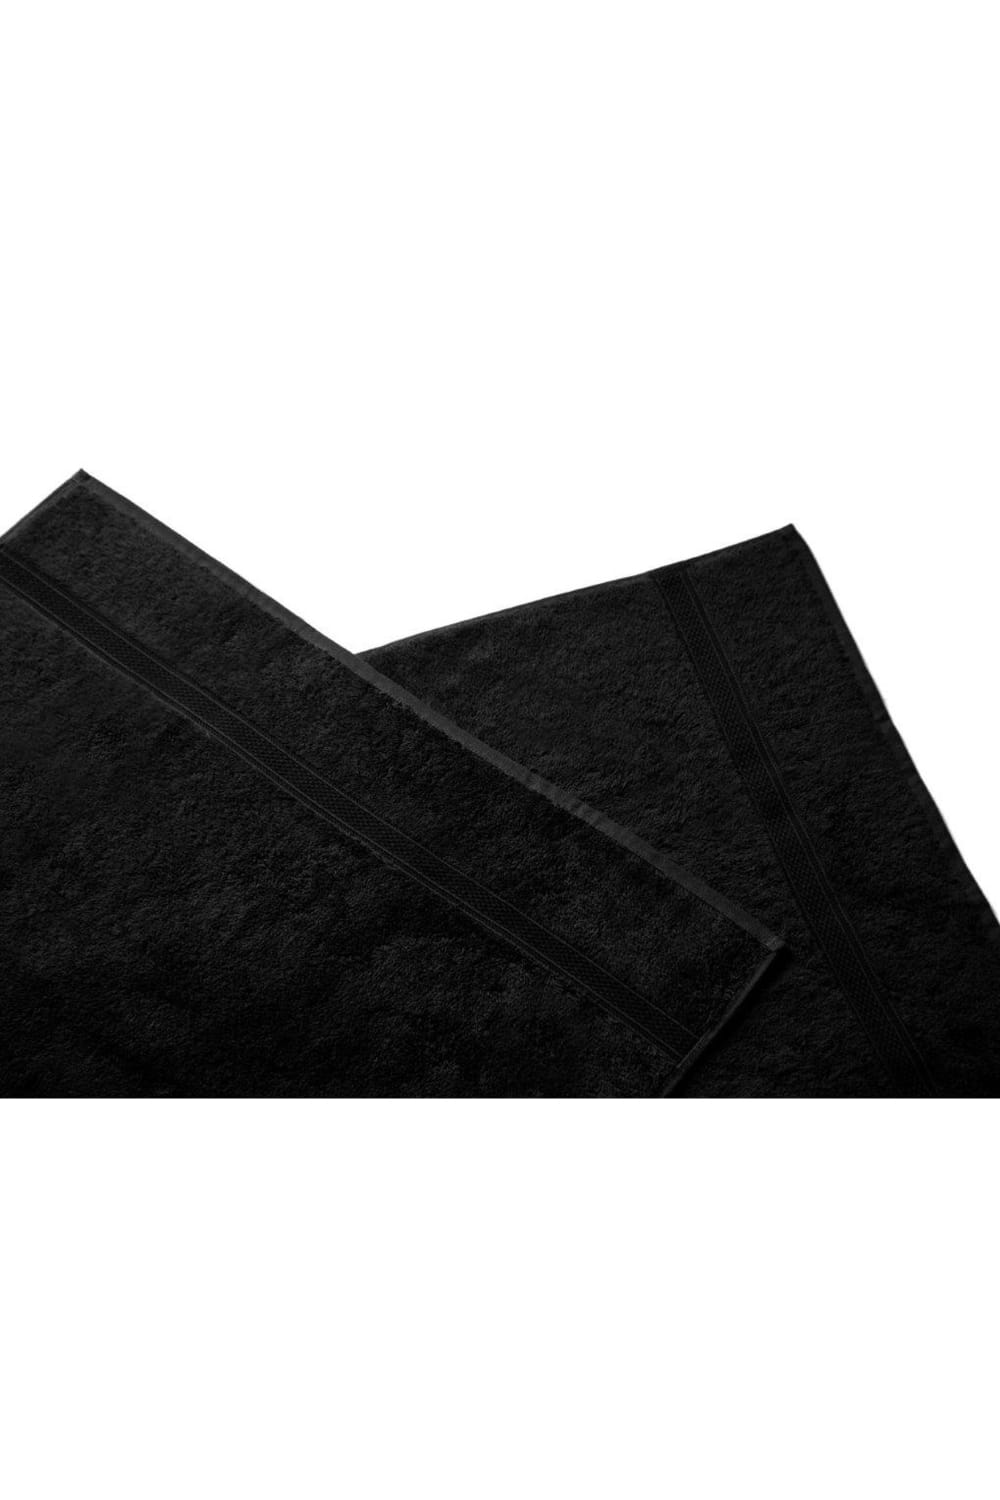 Belledorm Hotel Madison Bath Towel (Black) (One Size)